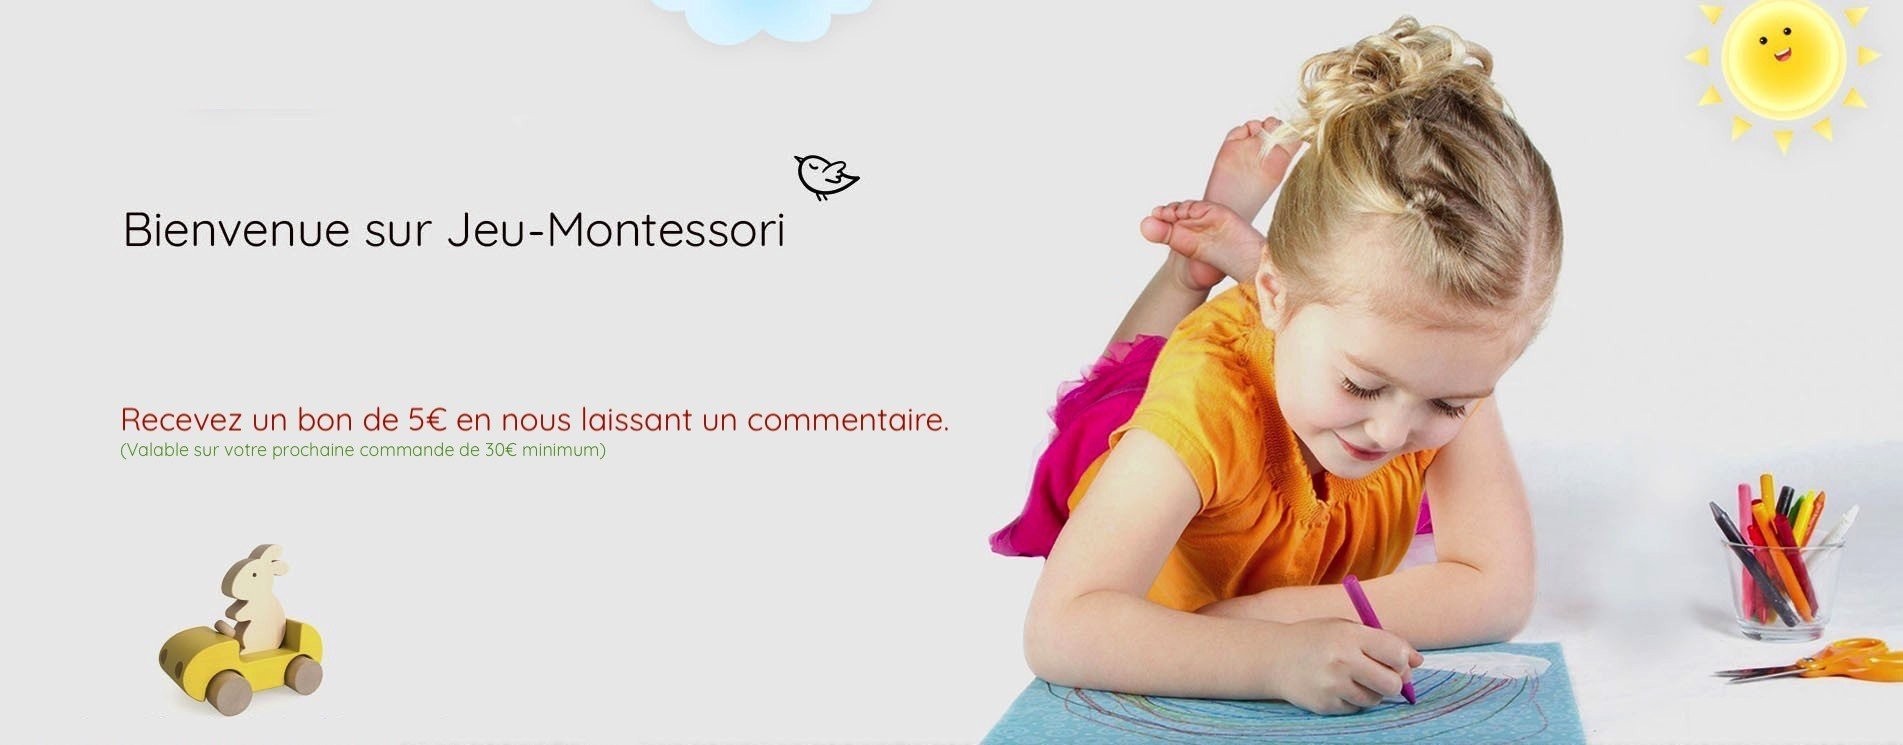 Jeux Montessori : Materiel Montessori & Jouet Montessori